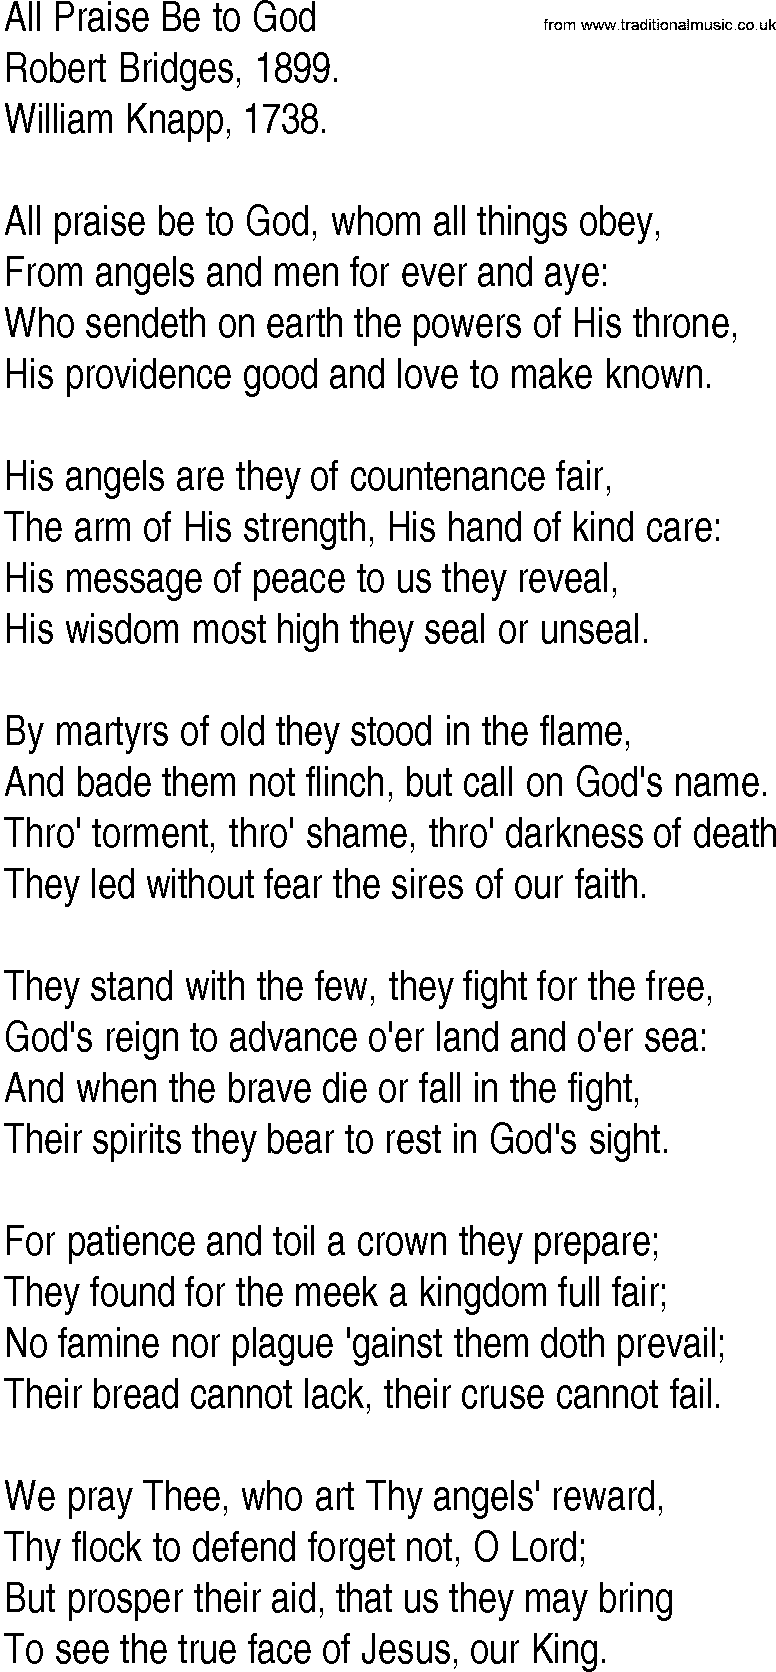 Hymn and Gospel Song Lyrics for All Praise Be to God by Robert Bridges